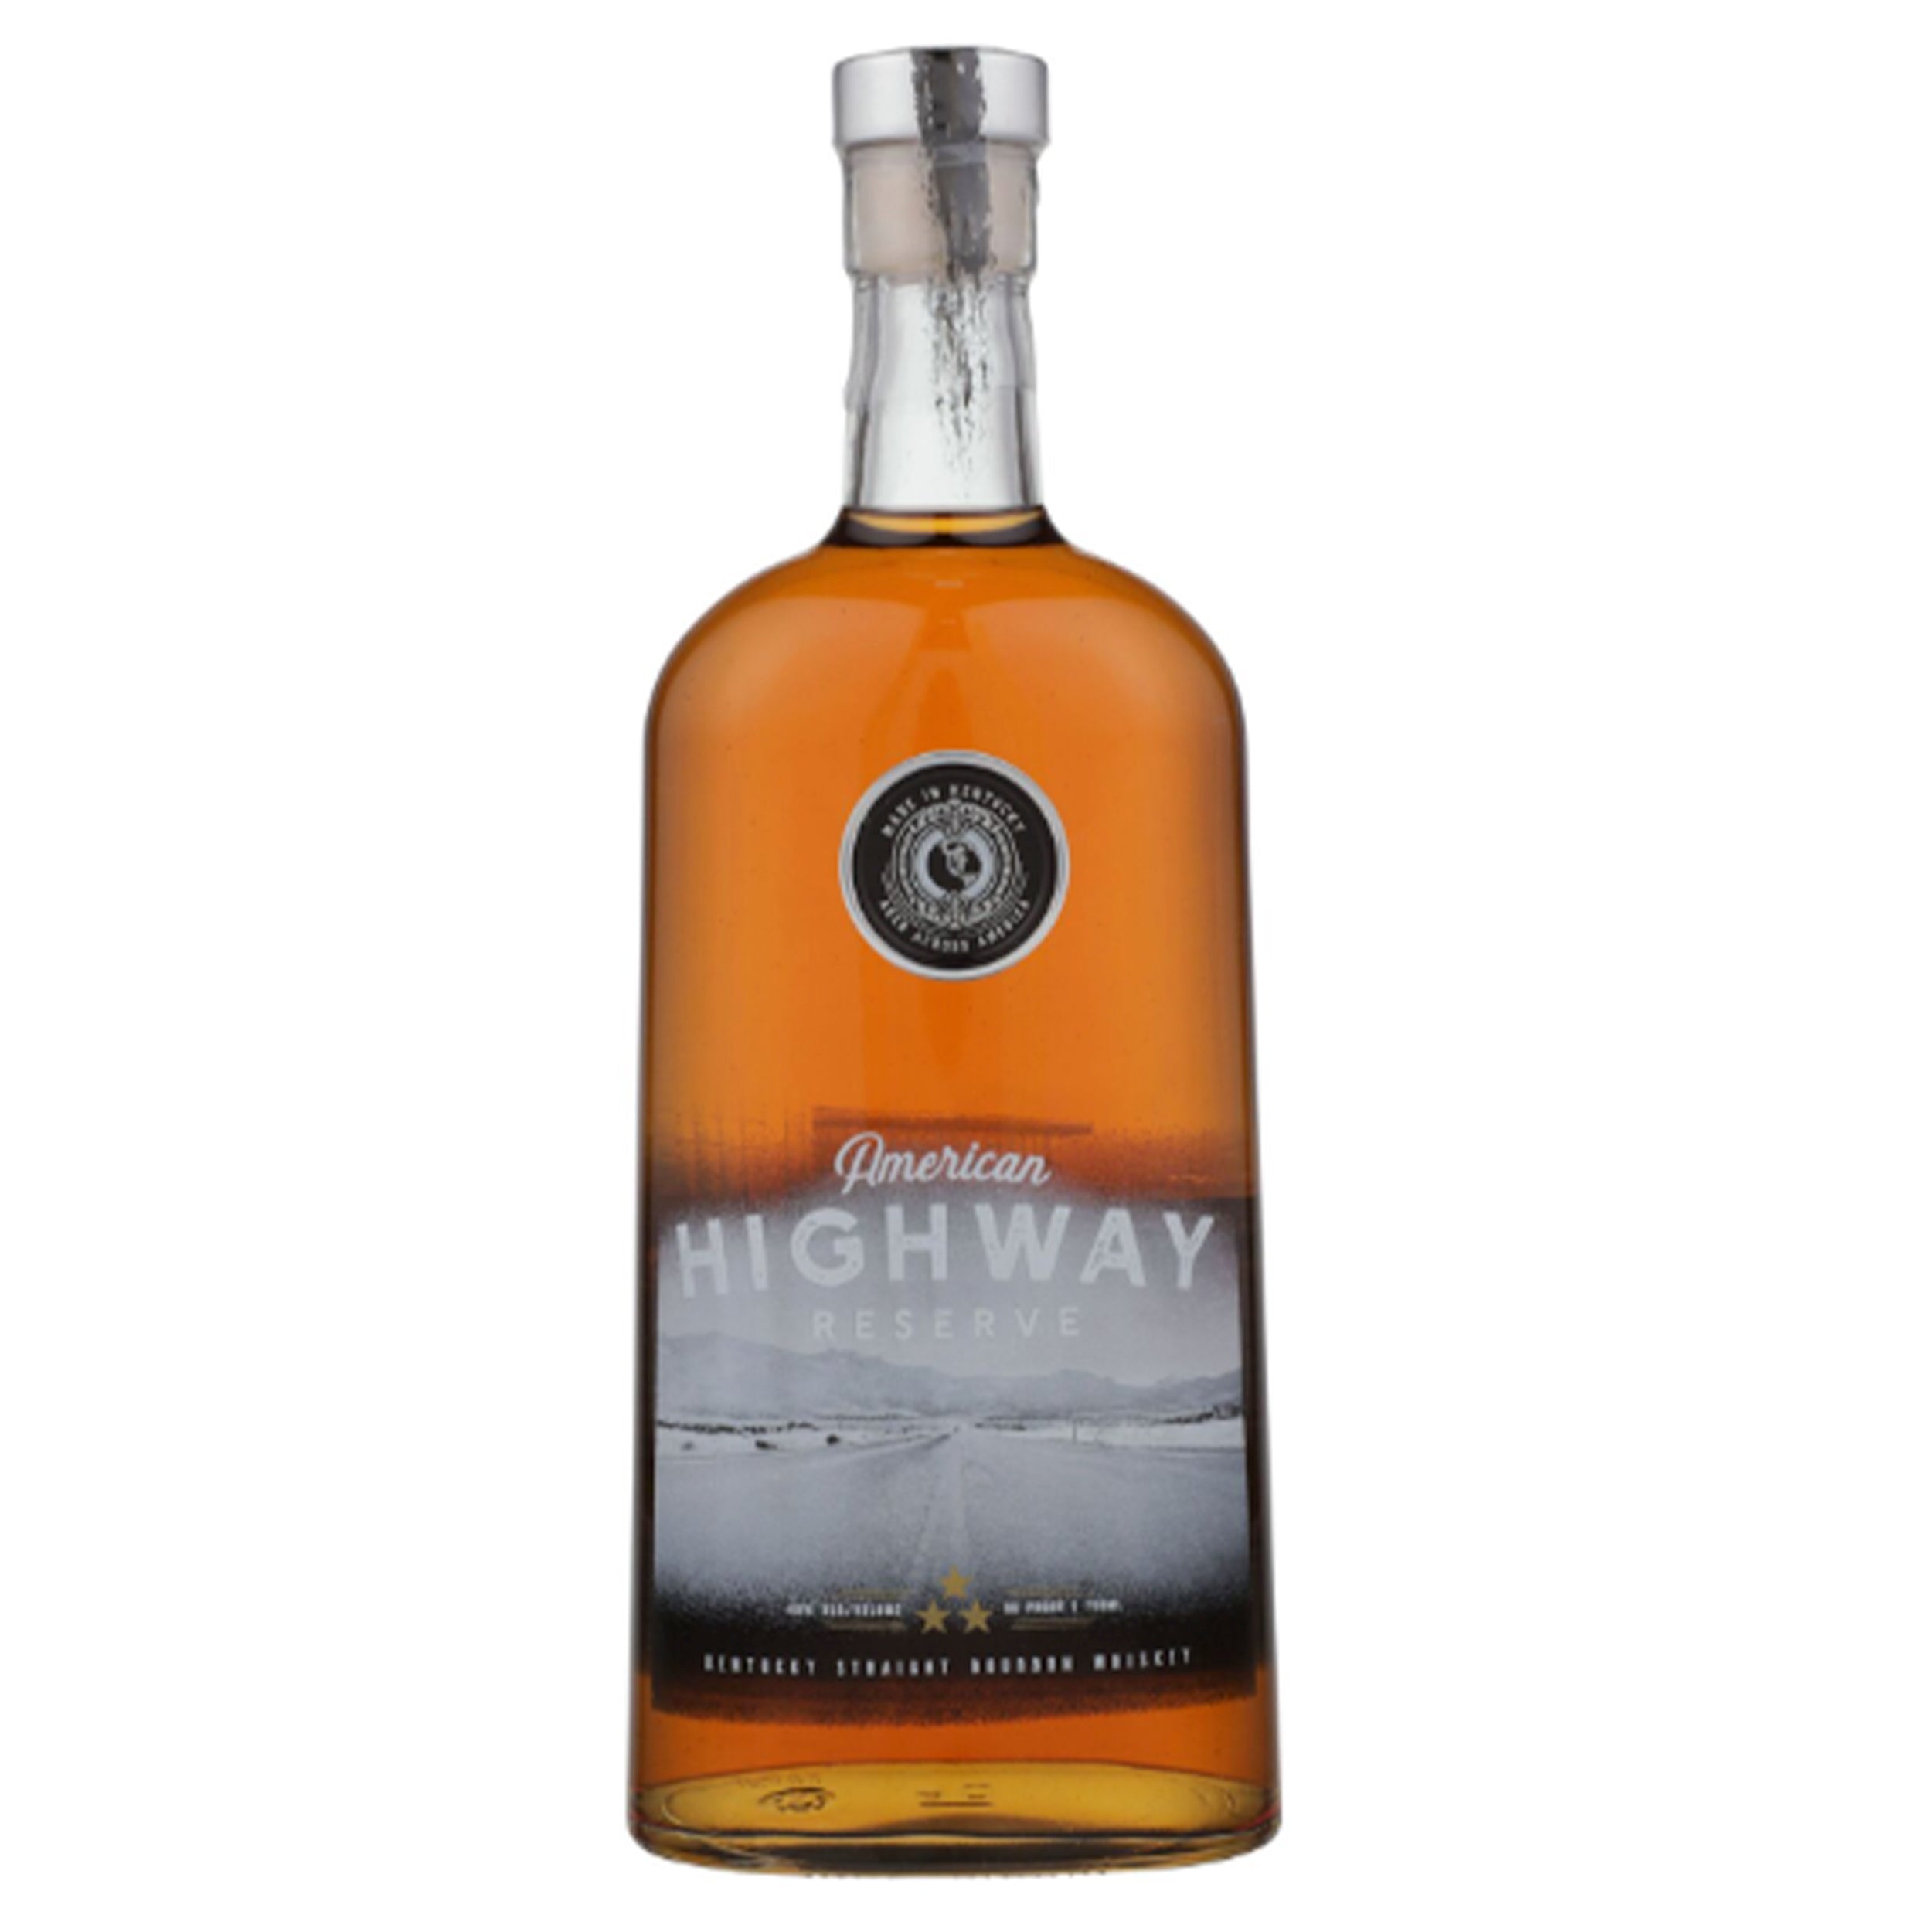 American Highway Reserve Straight Bourbon Whiskey